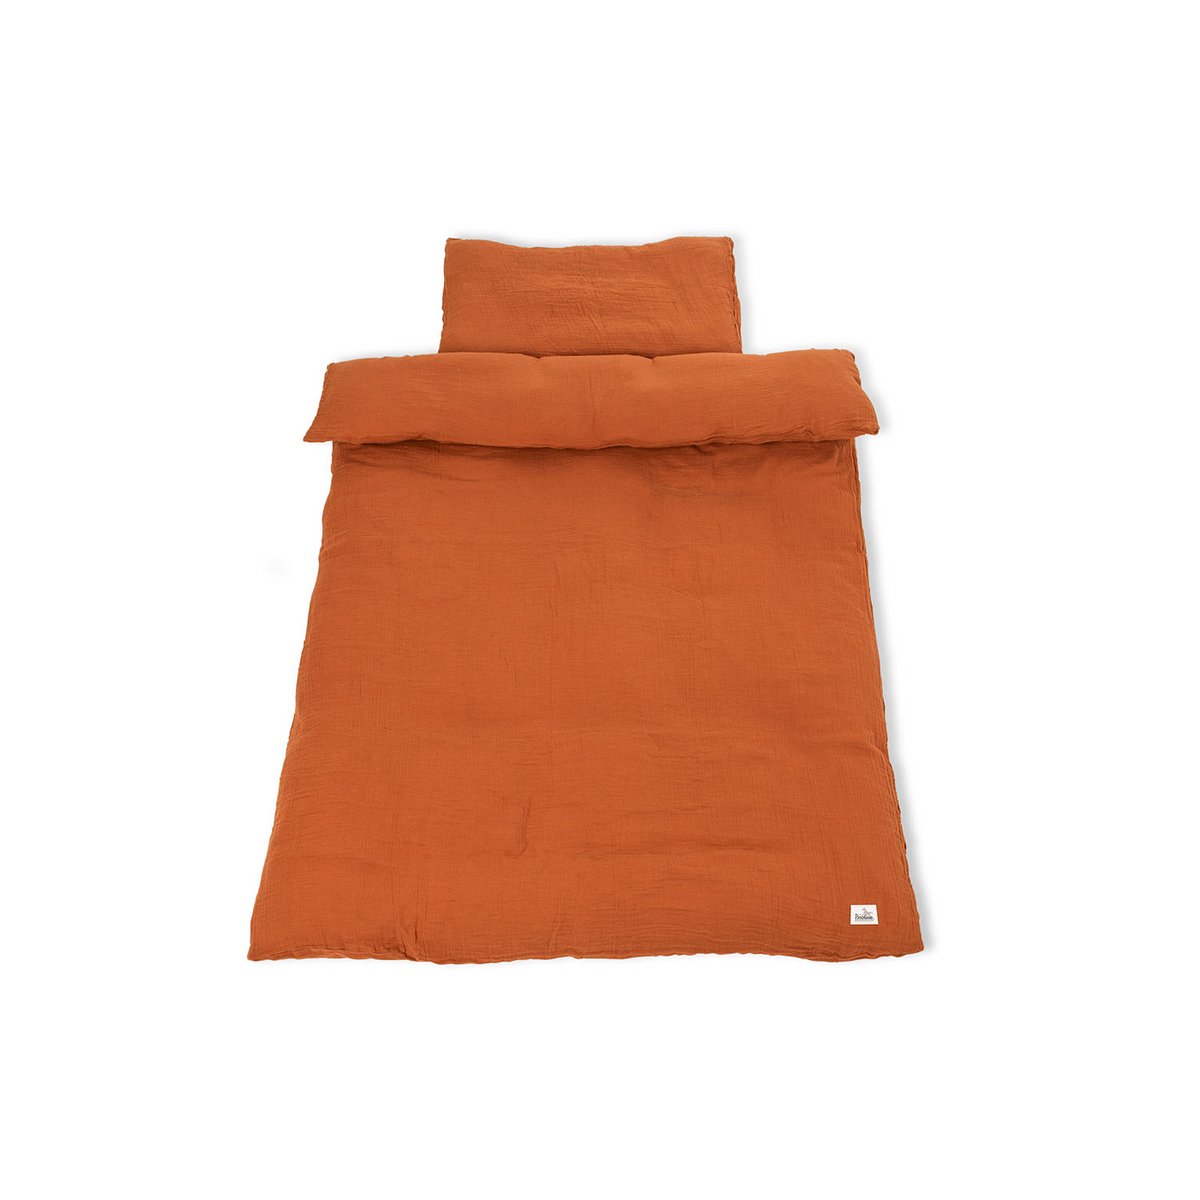 Muslin duvet cover set for children's beds red 2 pcs